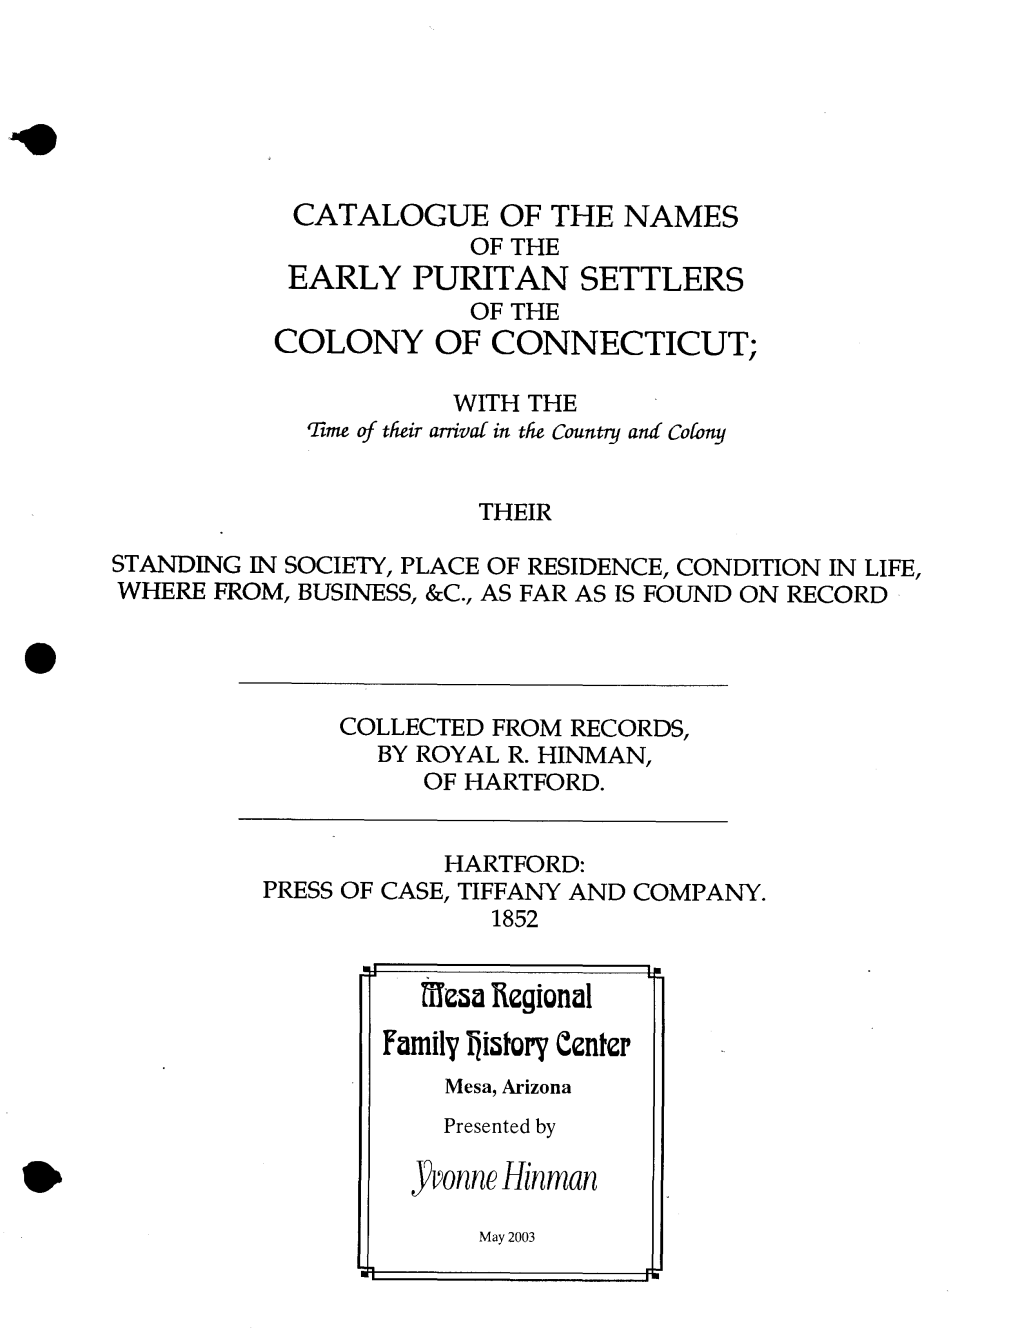 Catalog Puritan Settlers of Connecticut